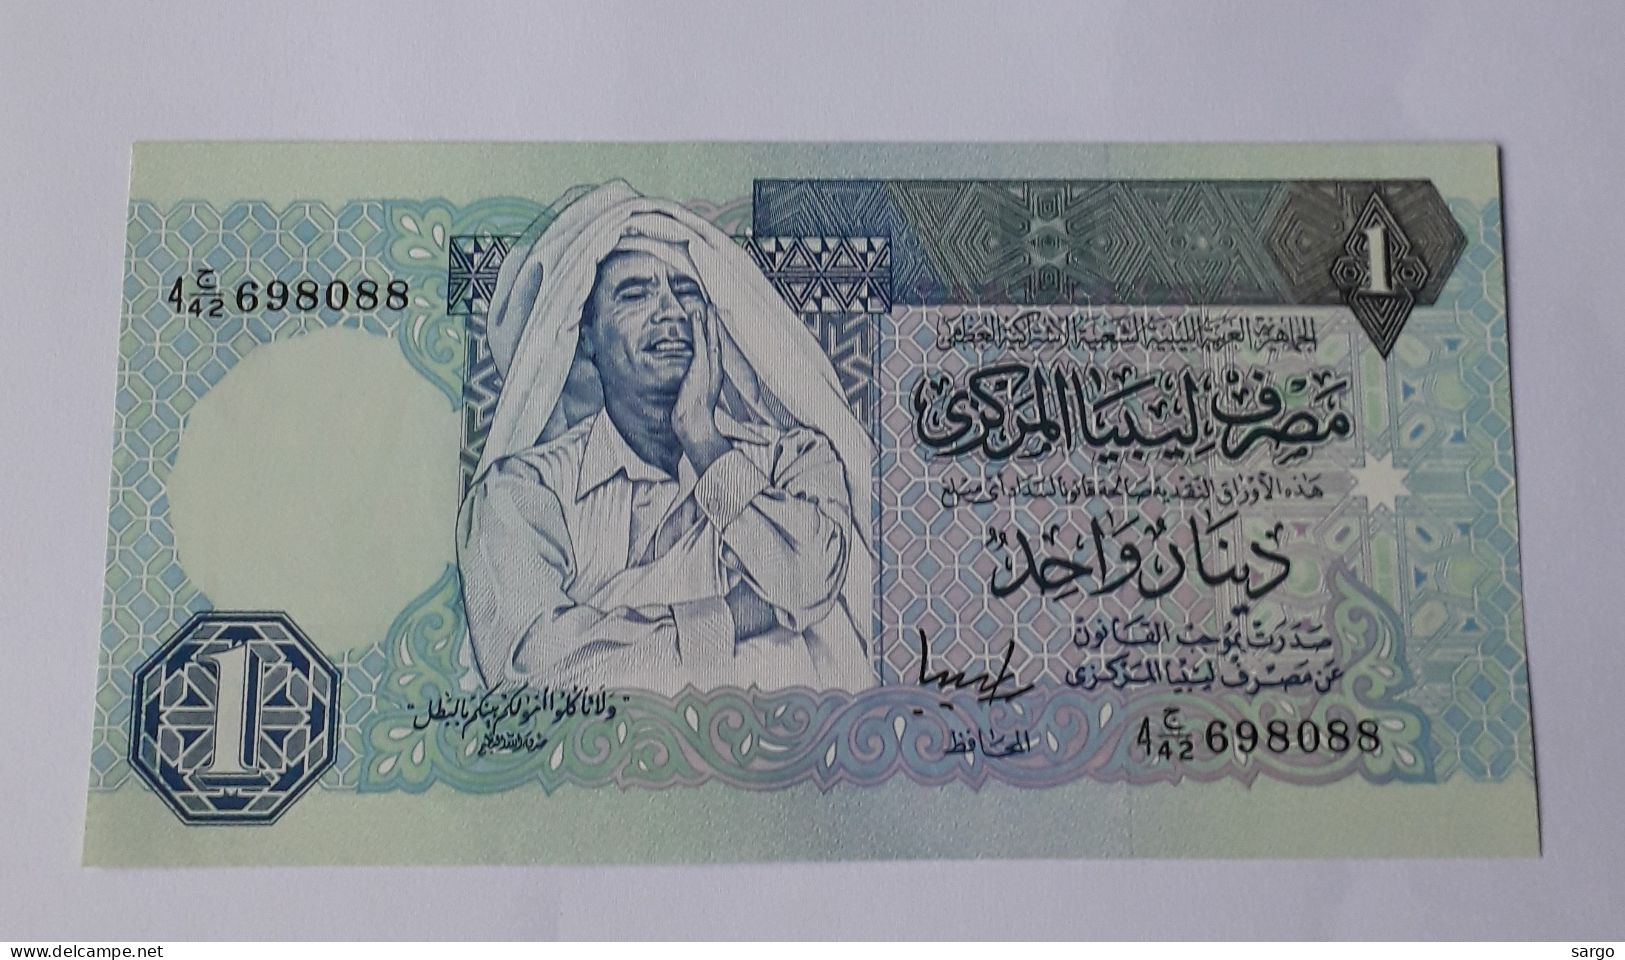 LIBYA - 1 DINAR - 1991 -  P 59b  - UNC - BANKNOTES - PAPER MONEY - CARTAMONETA - - Libië